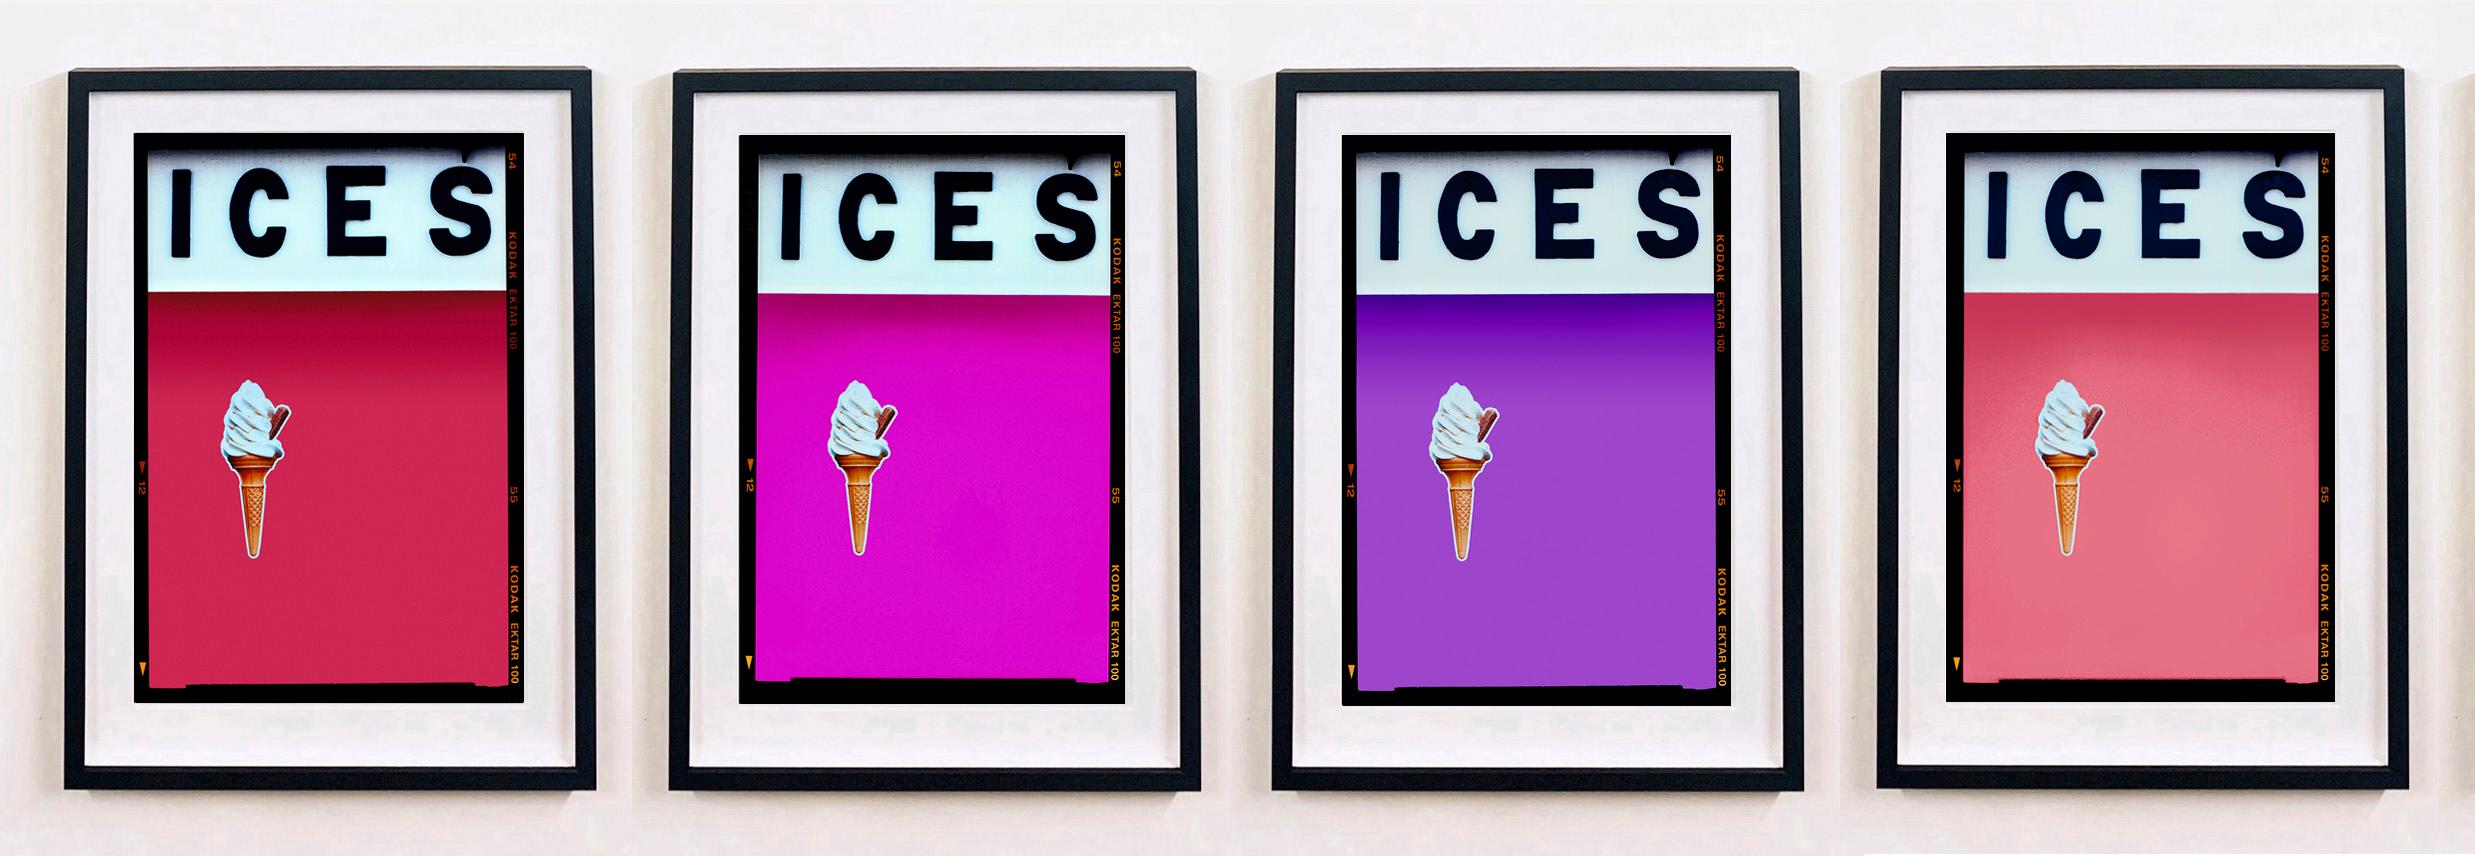 Richard Heeps Print - ICES Hues of Rouge- Four Framed Artworks - Pop Art Color Photography